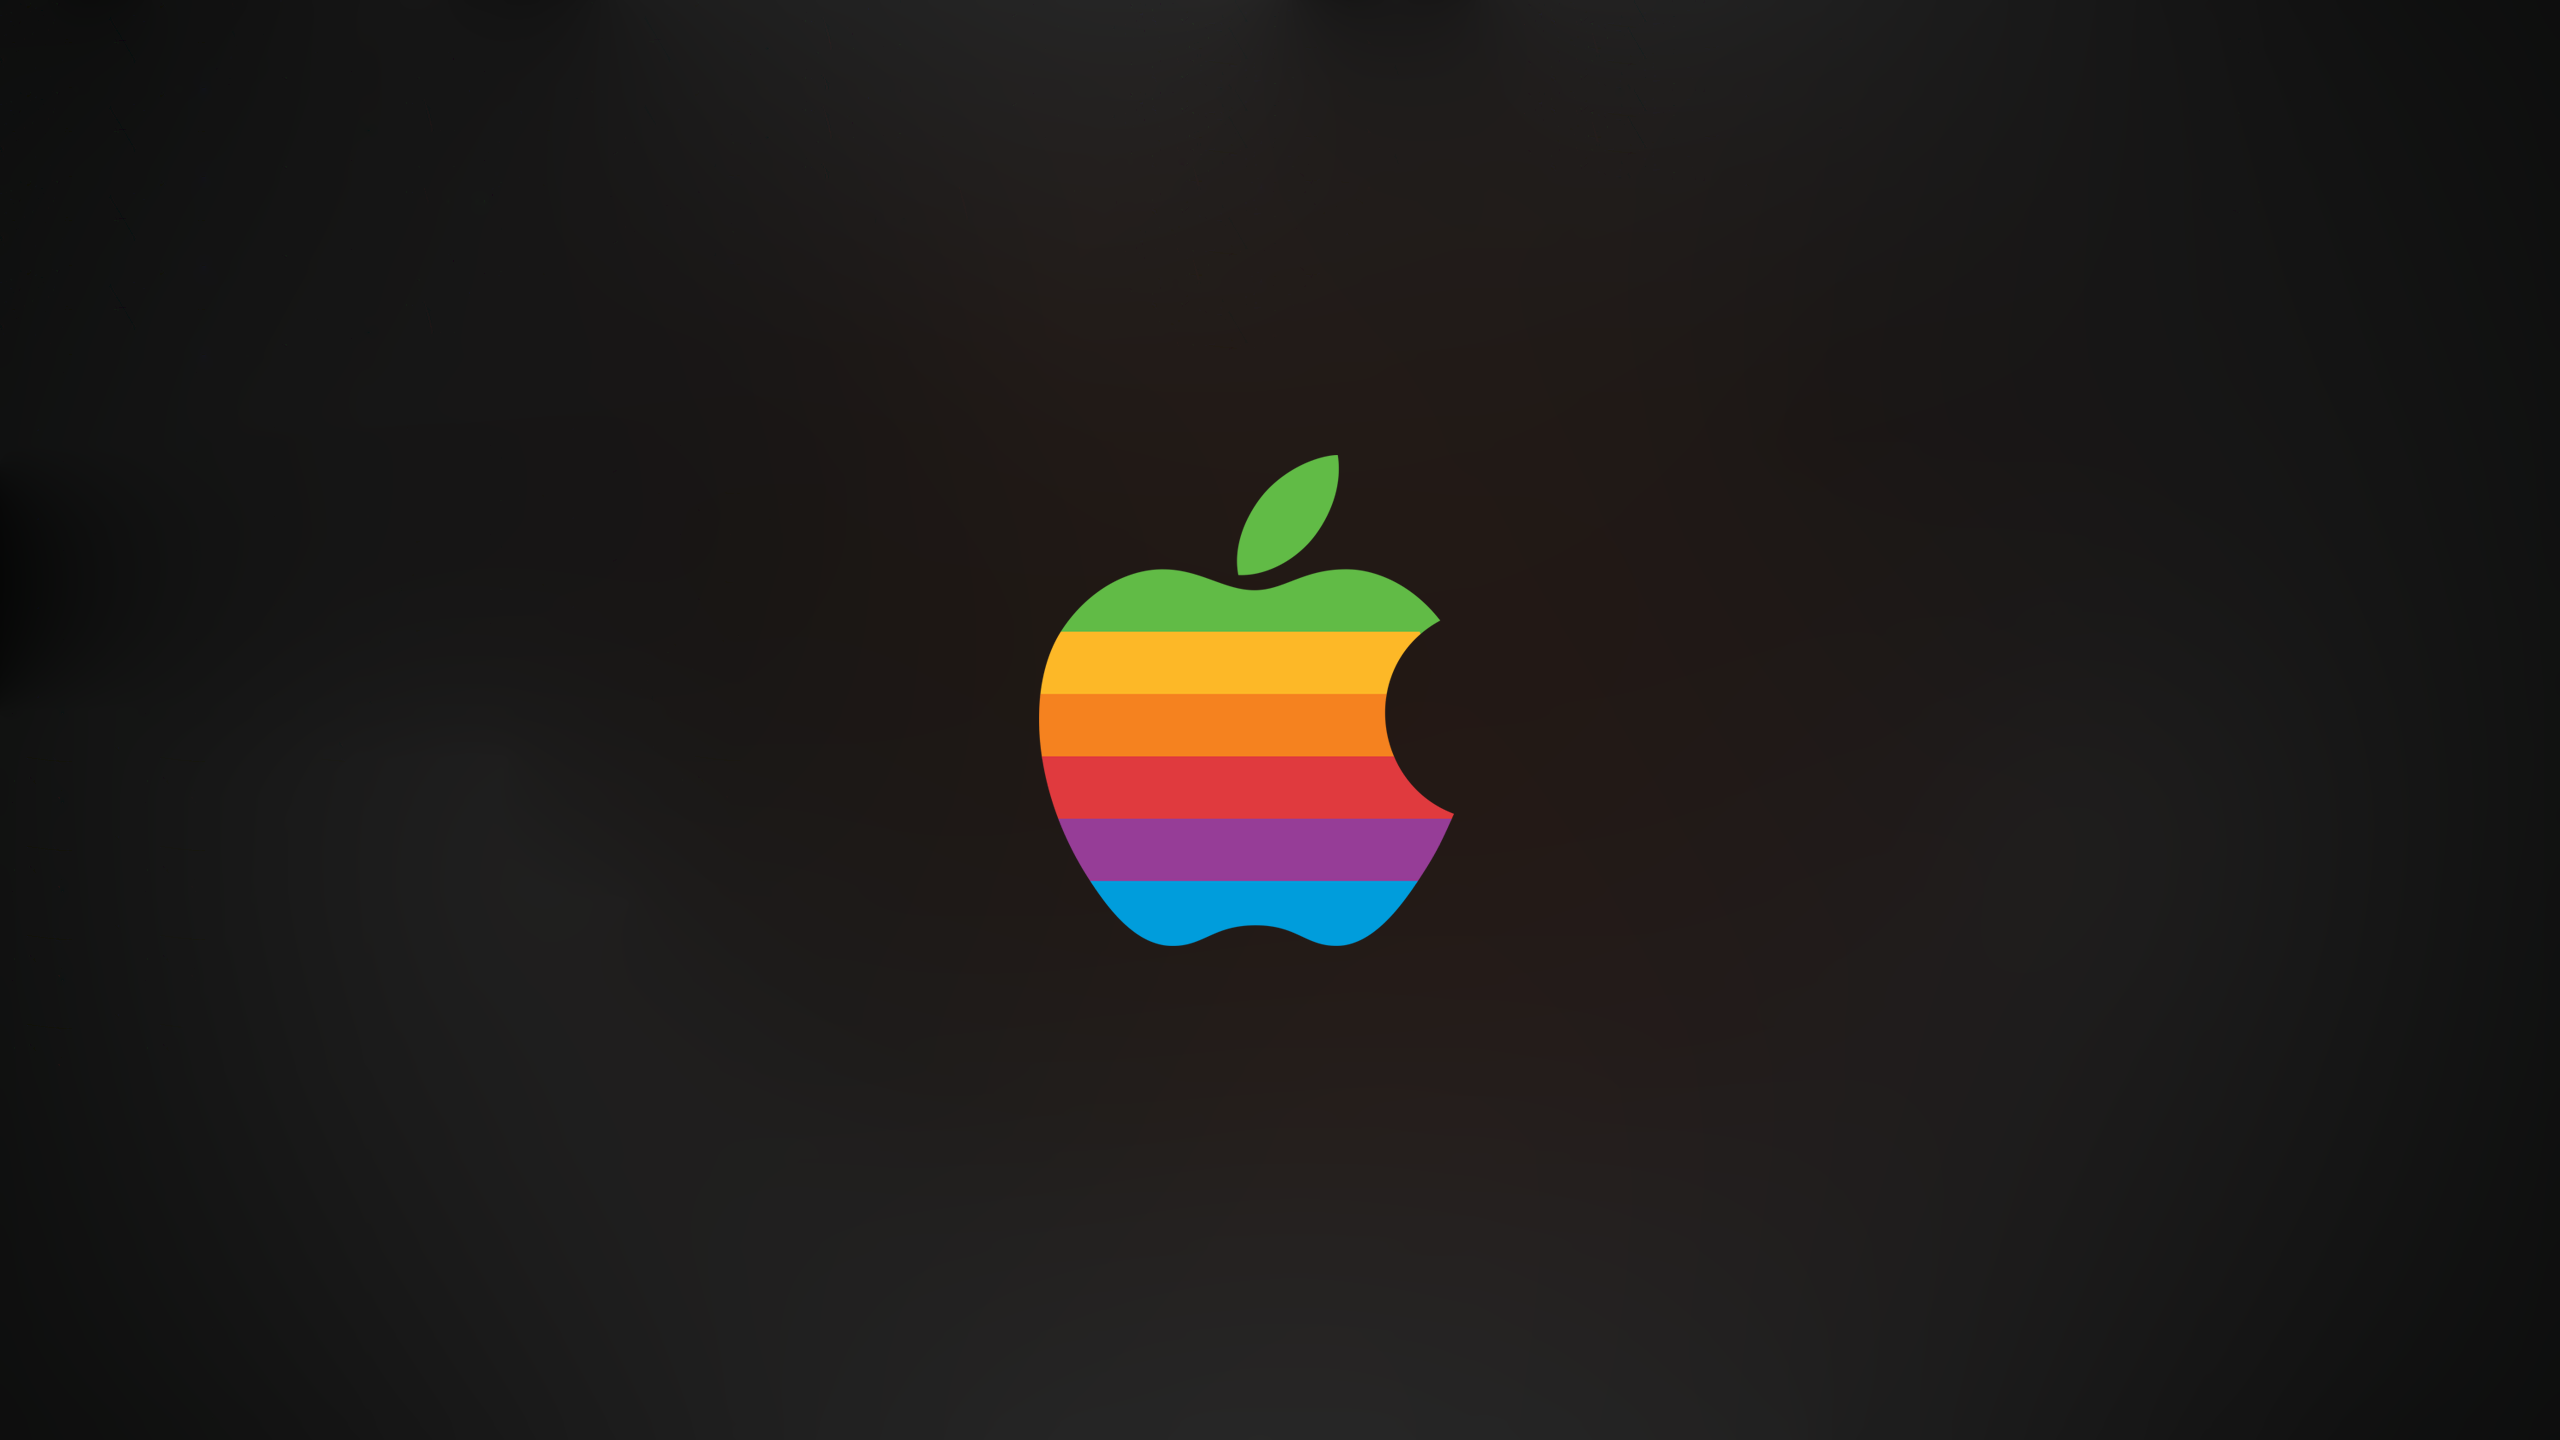 General 2560x1440 Apple Inc. colorful logo dark background minimalism brand simple background apples